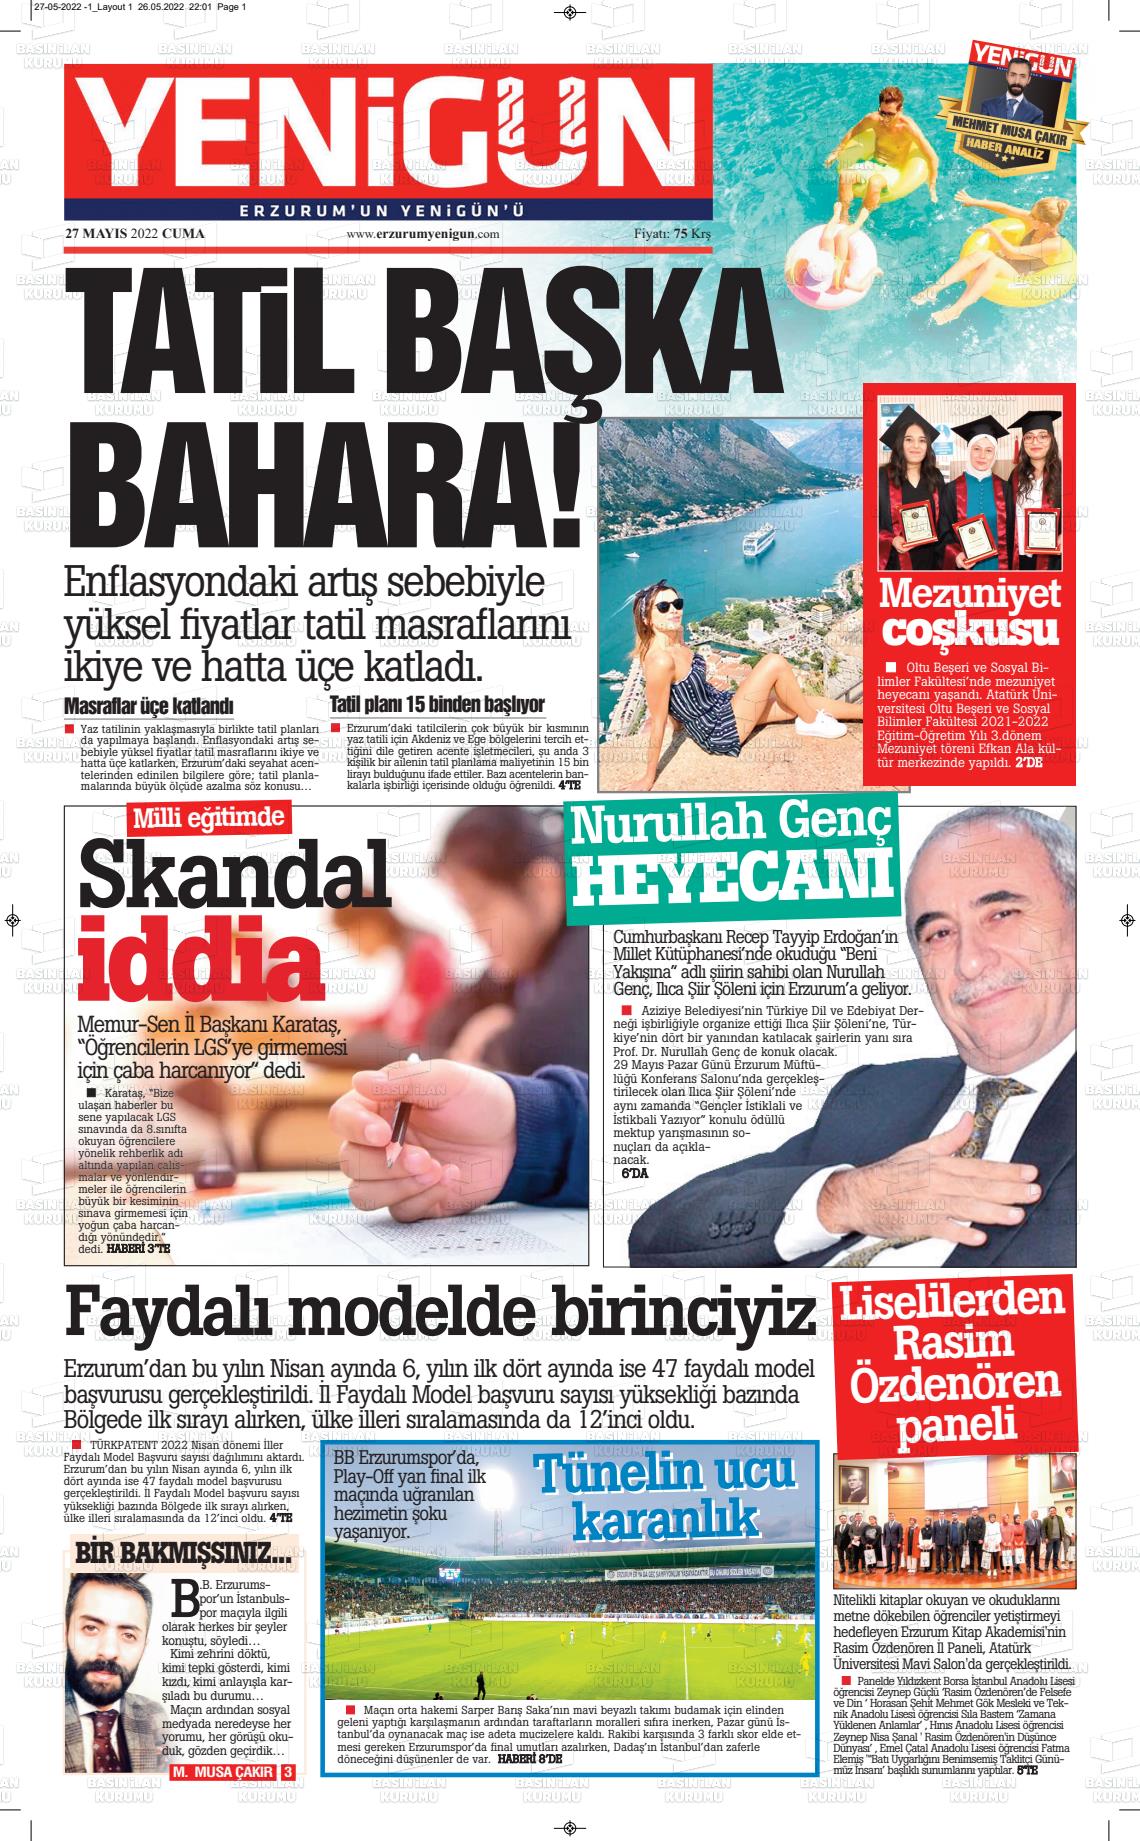 27 Mayıs 2022 Erzurum Yenigün Gazete Manşeti